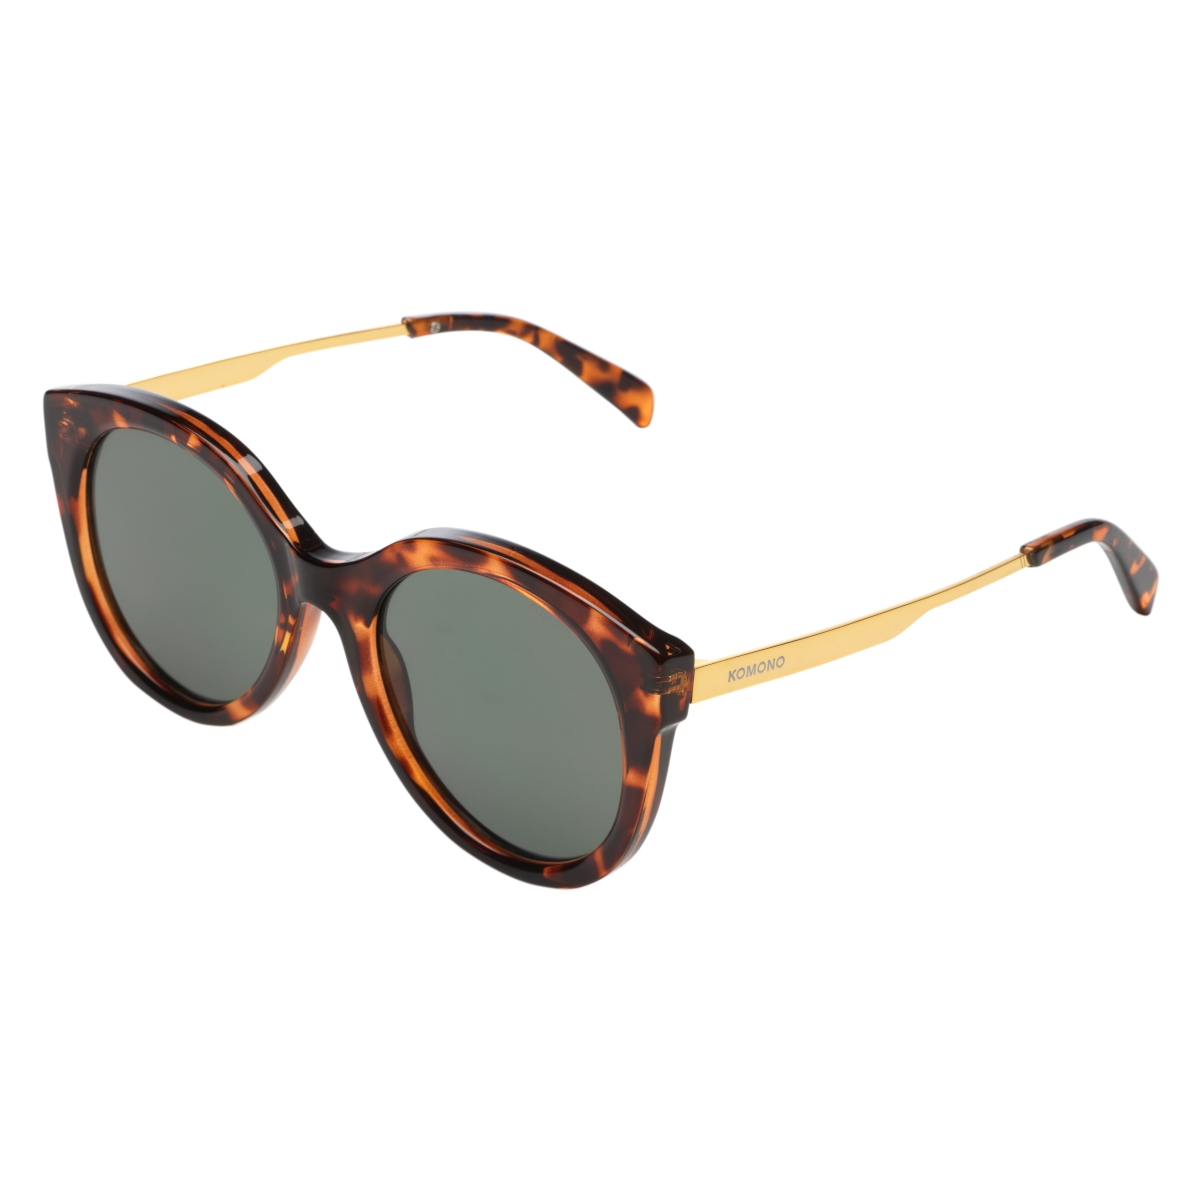 Komono Sunglasses - Στρογγυλά γυαλιά ηλίου - Havana Go